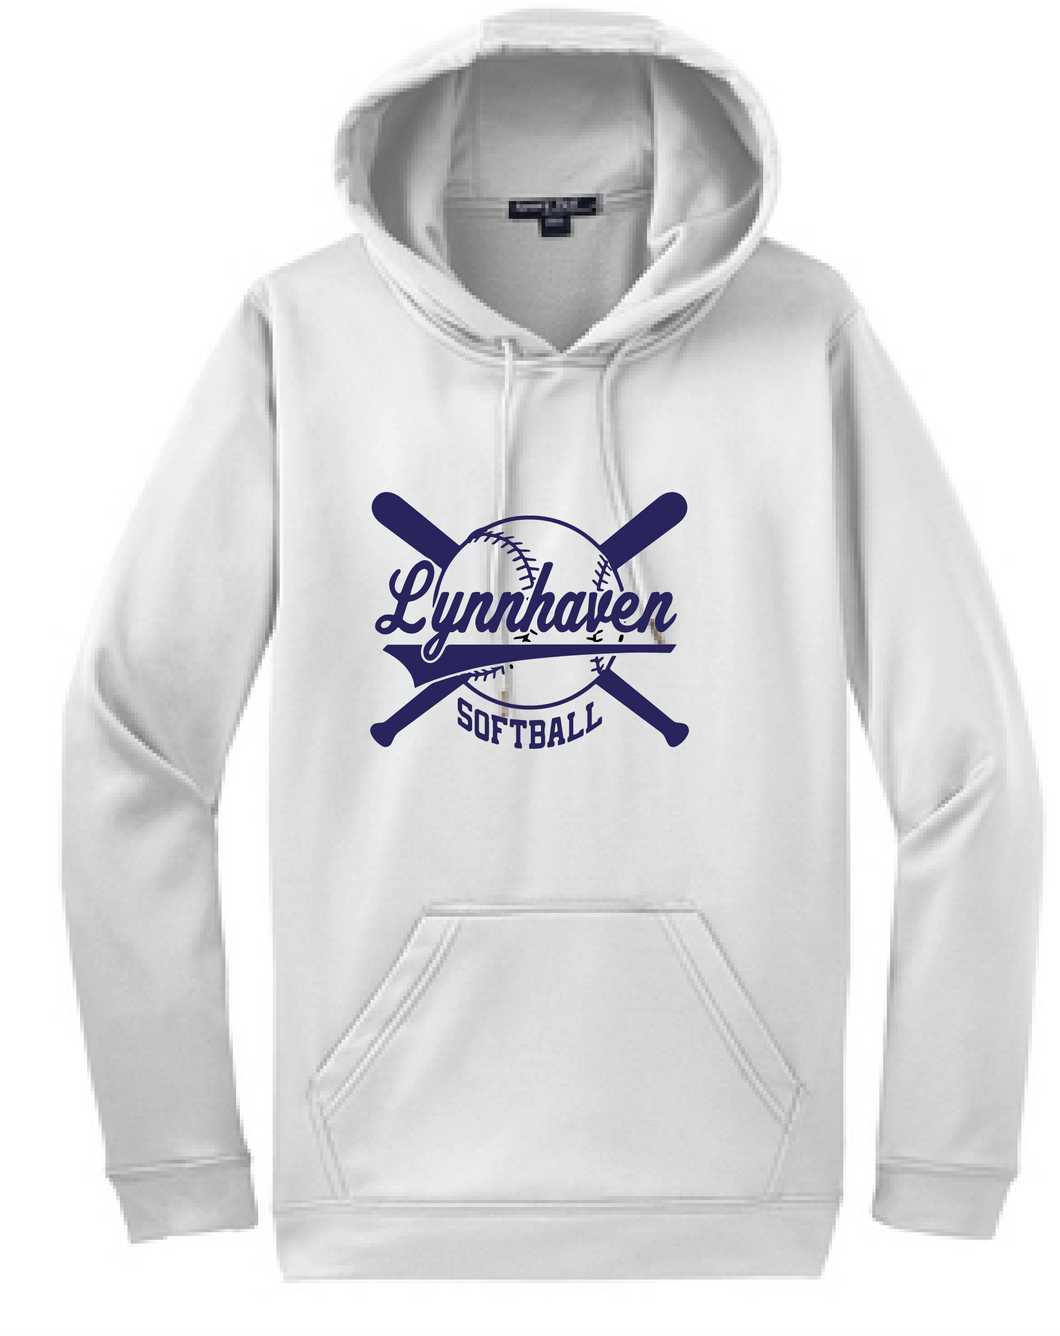 Performance Hoody Sweatshirt / White / Lynnhaven Softball - Fidgety